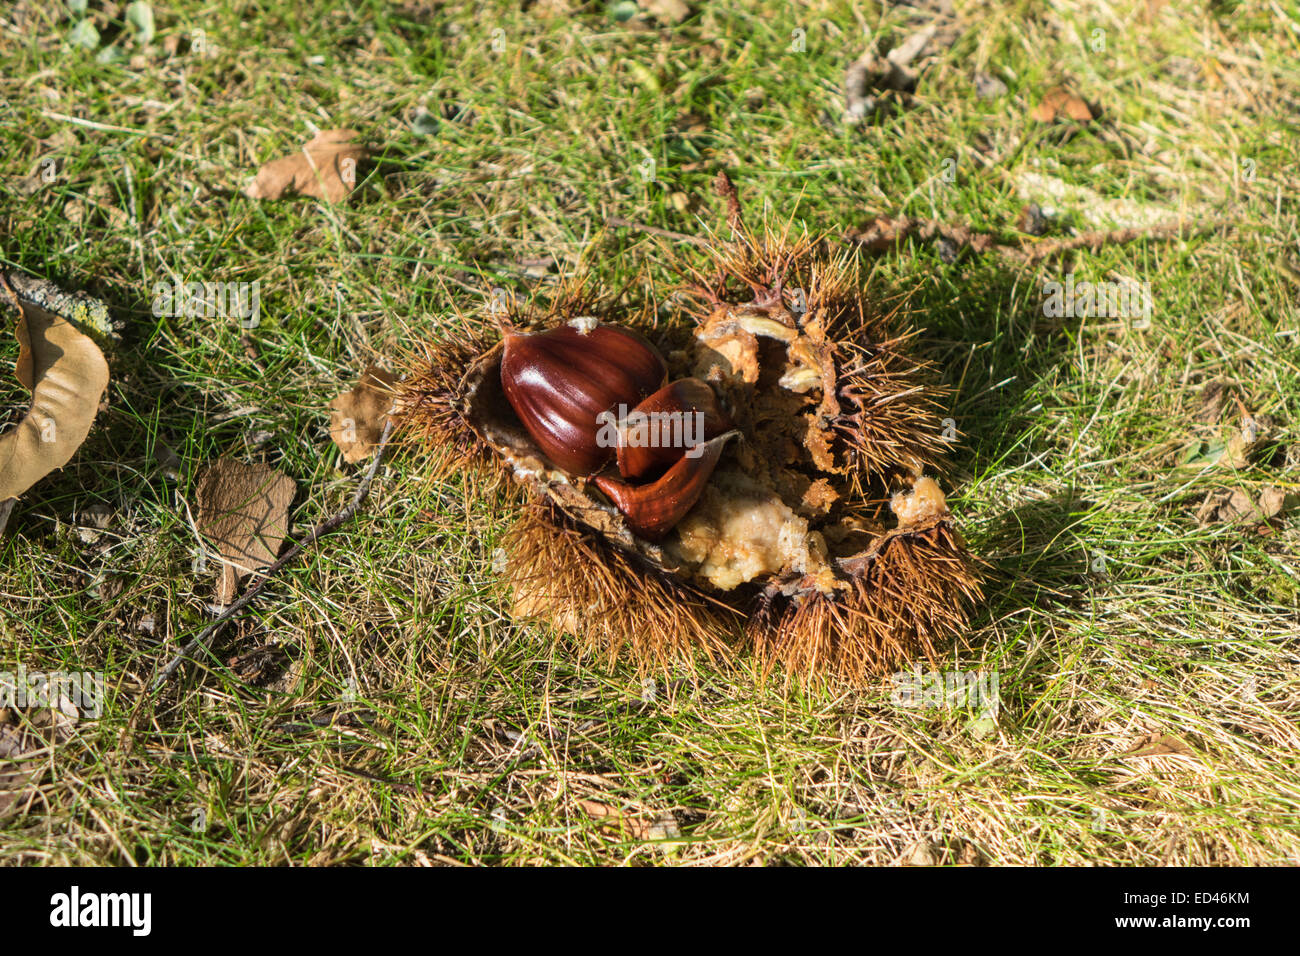 Castanea Sativa, Sweet Chestnut stachelige äußere Hülle platzen offene Nuss Samen sichtbar Stockfoto